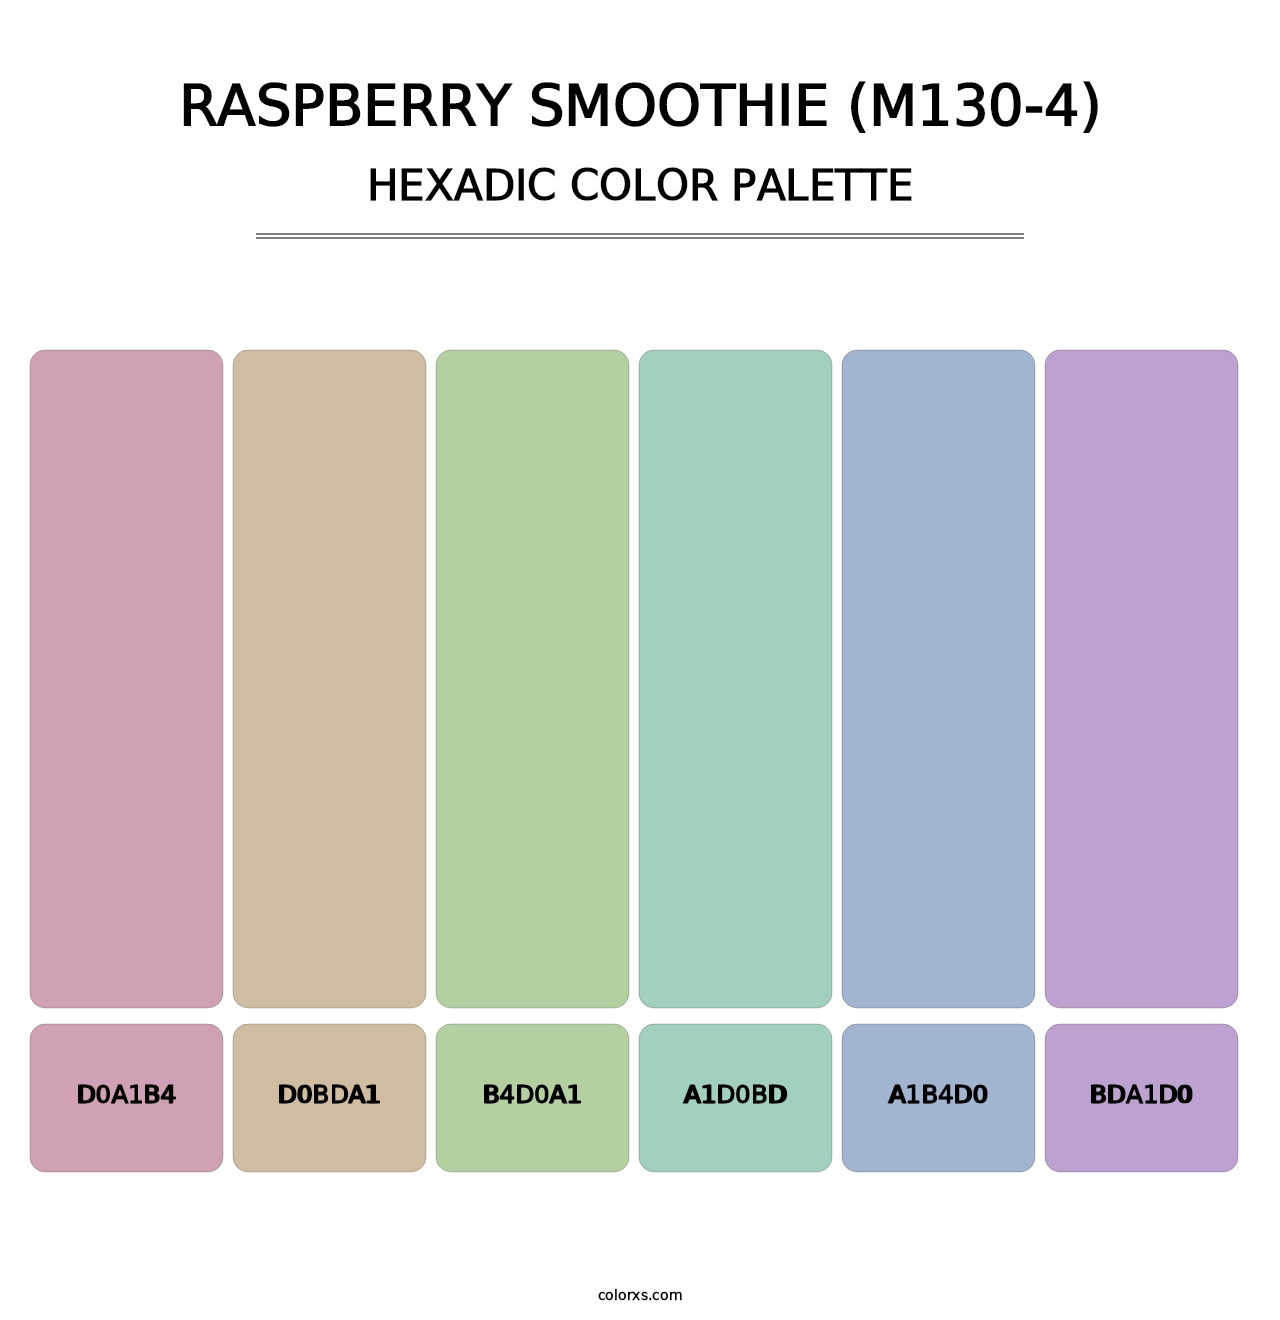 Raspberry Smoothie (M130-4) - Hexadic Color Palette